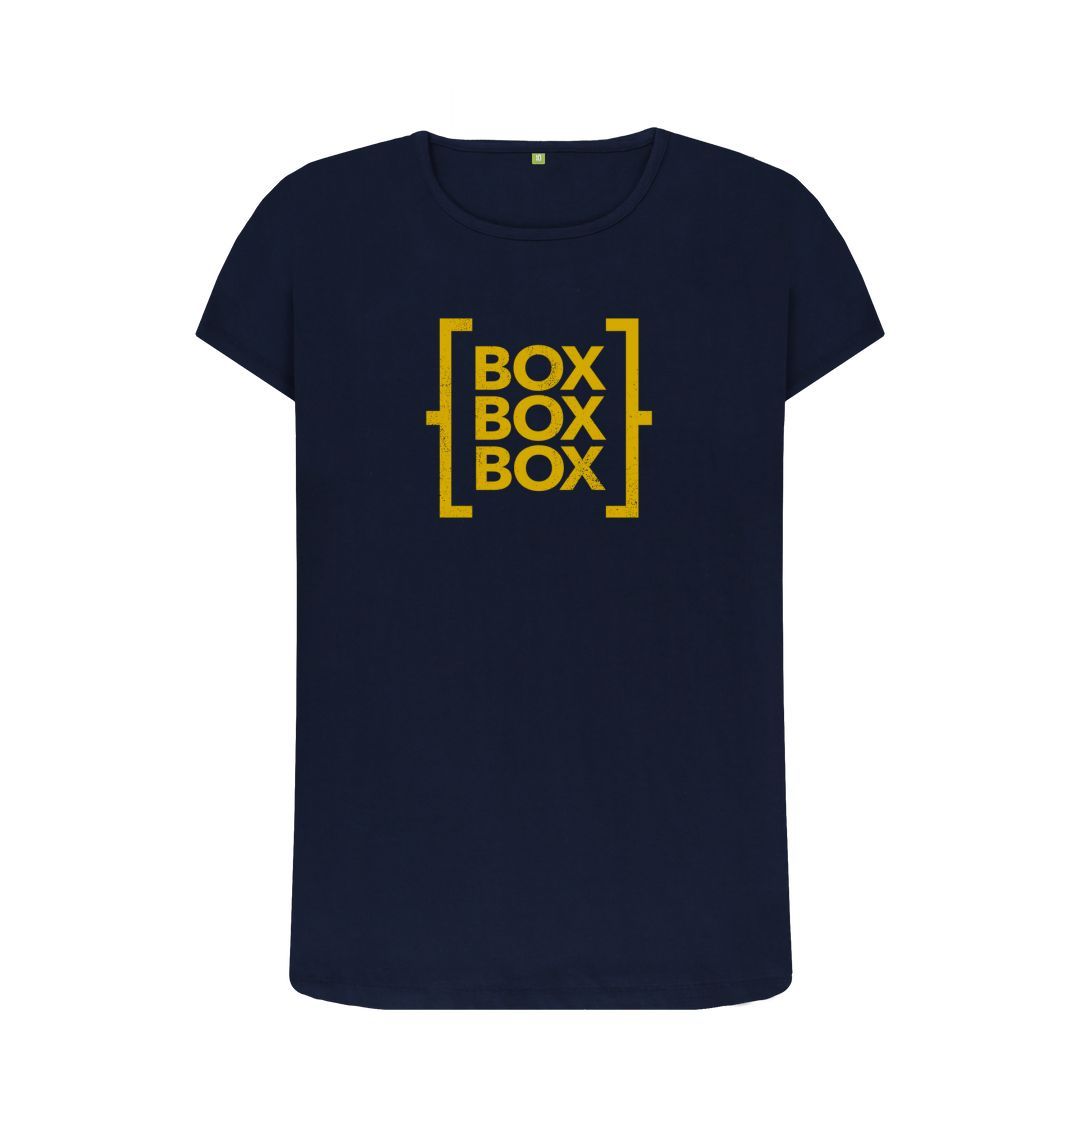 Navy Blue Box Box Box - the T-shirt (womens fit)